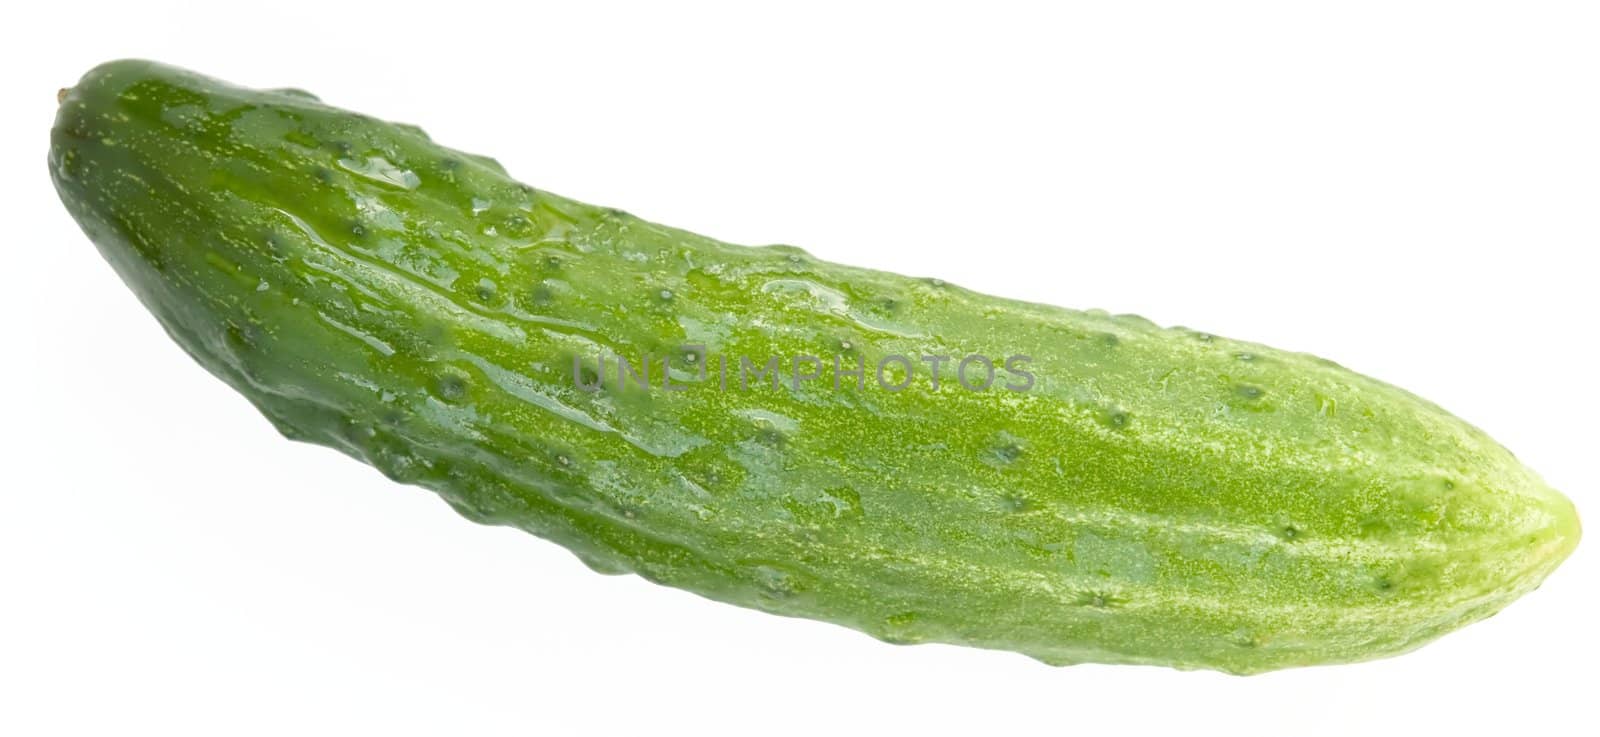 cucumber by stepanov